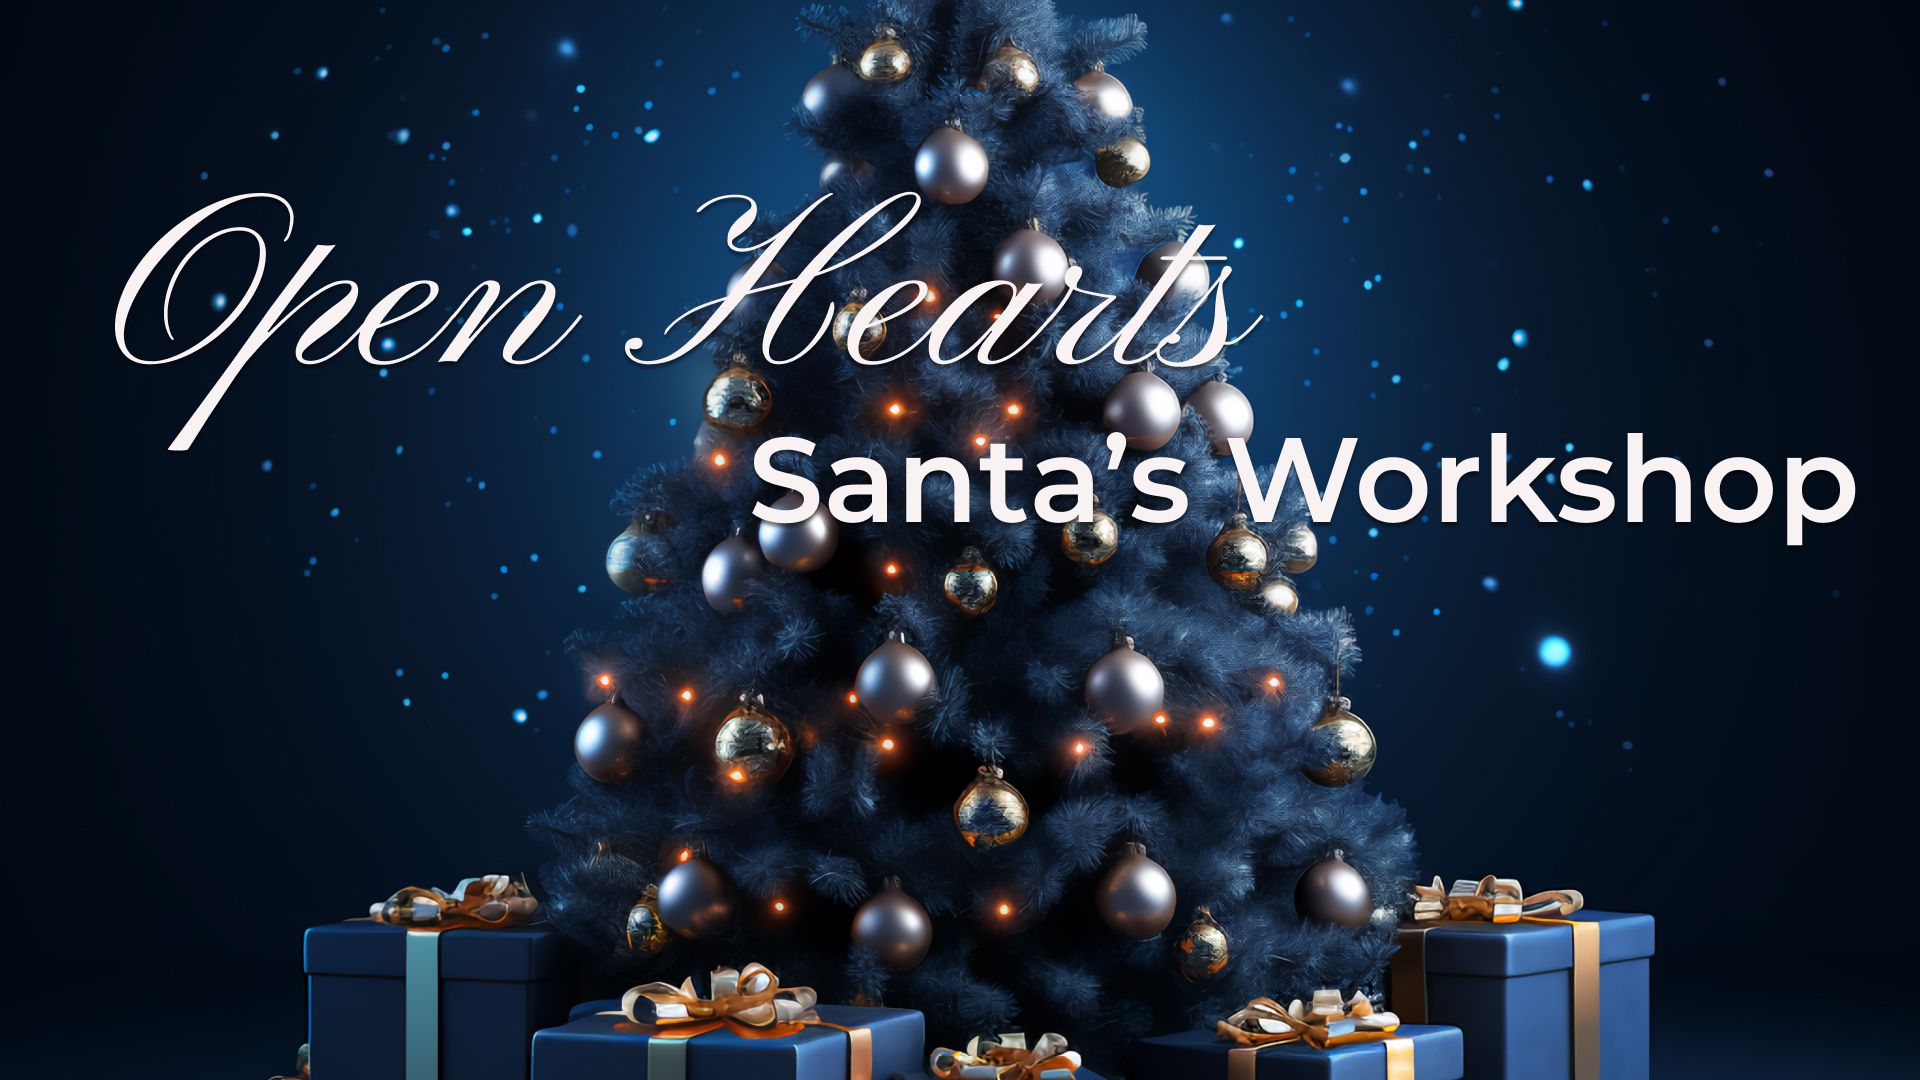 Open Hearts

Santa's Workshop
Saturday | 9:00am - 4:00pm
December 9
